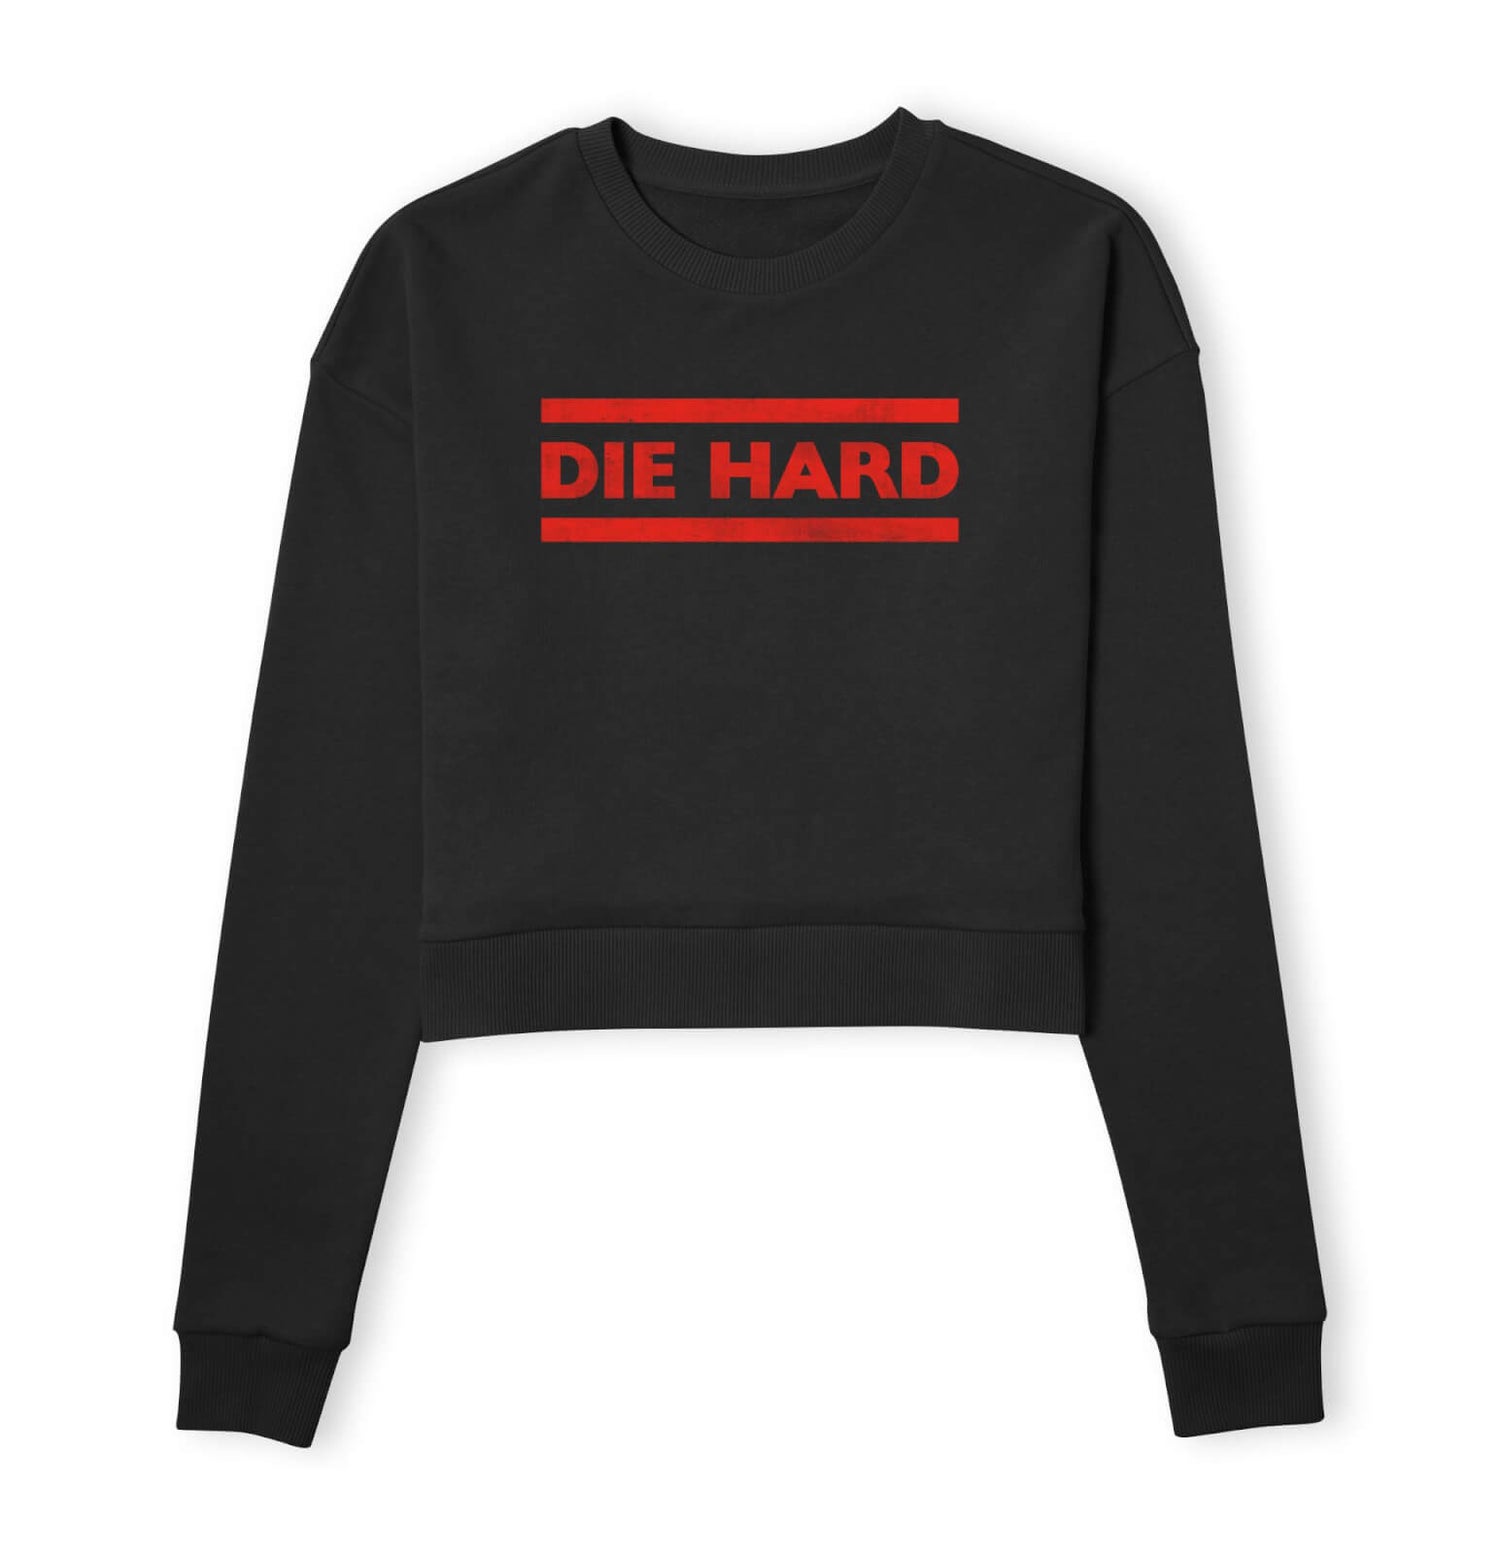 Die Hard Red Logo Women's Cropped Sweatshirt - Black